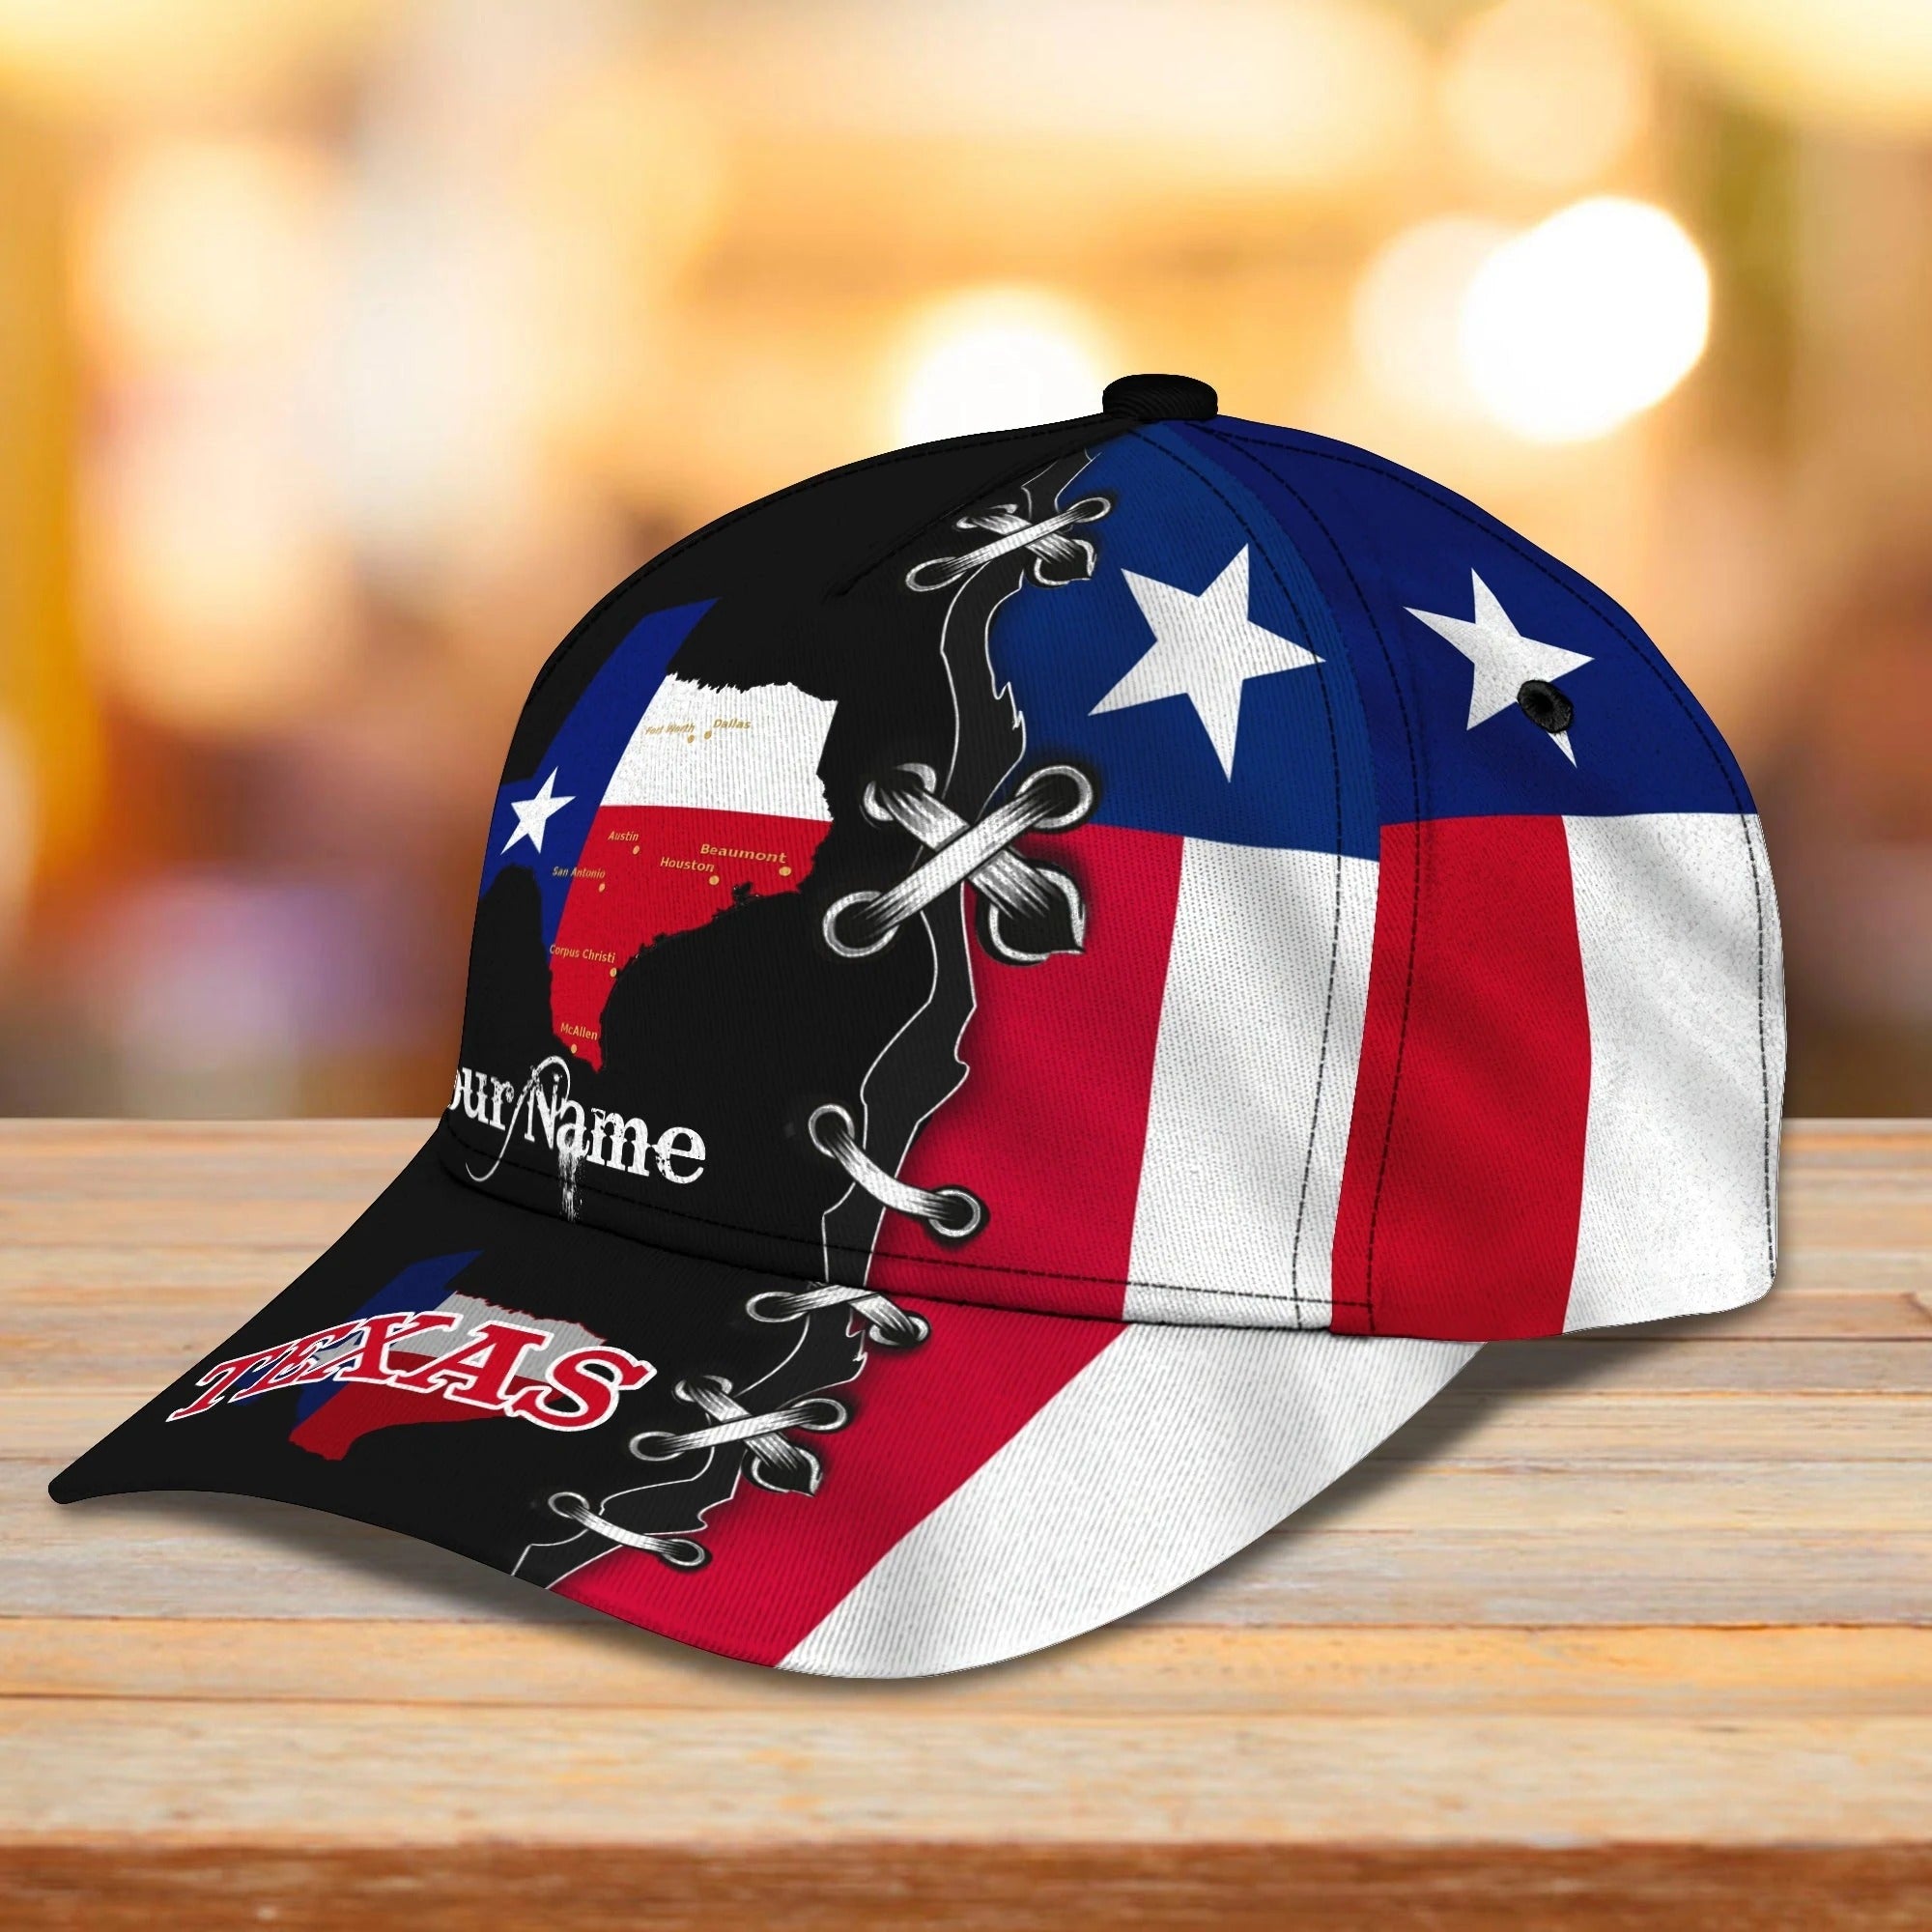 Personalized Name 3D Full Printing Texas Cap/ Texas Baseball Classic Cap Hat